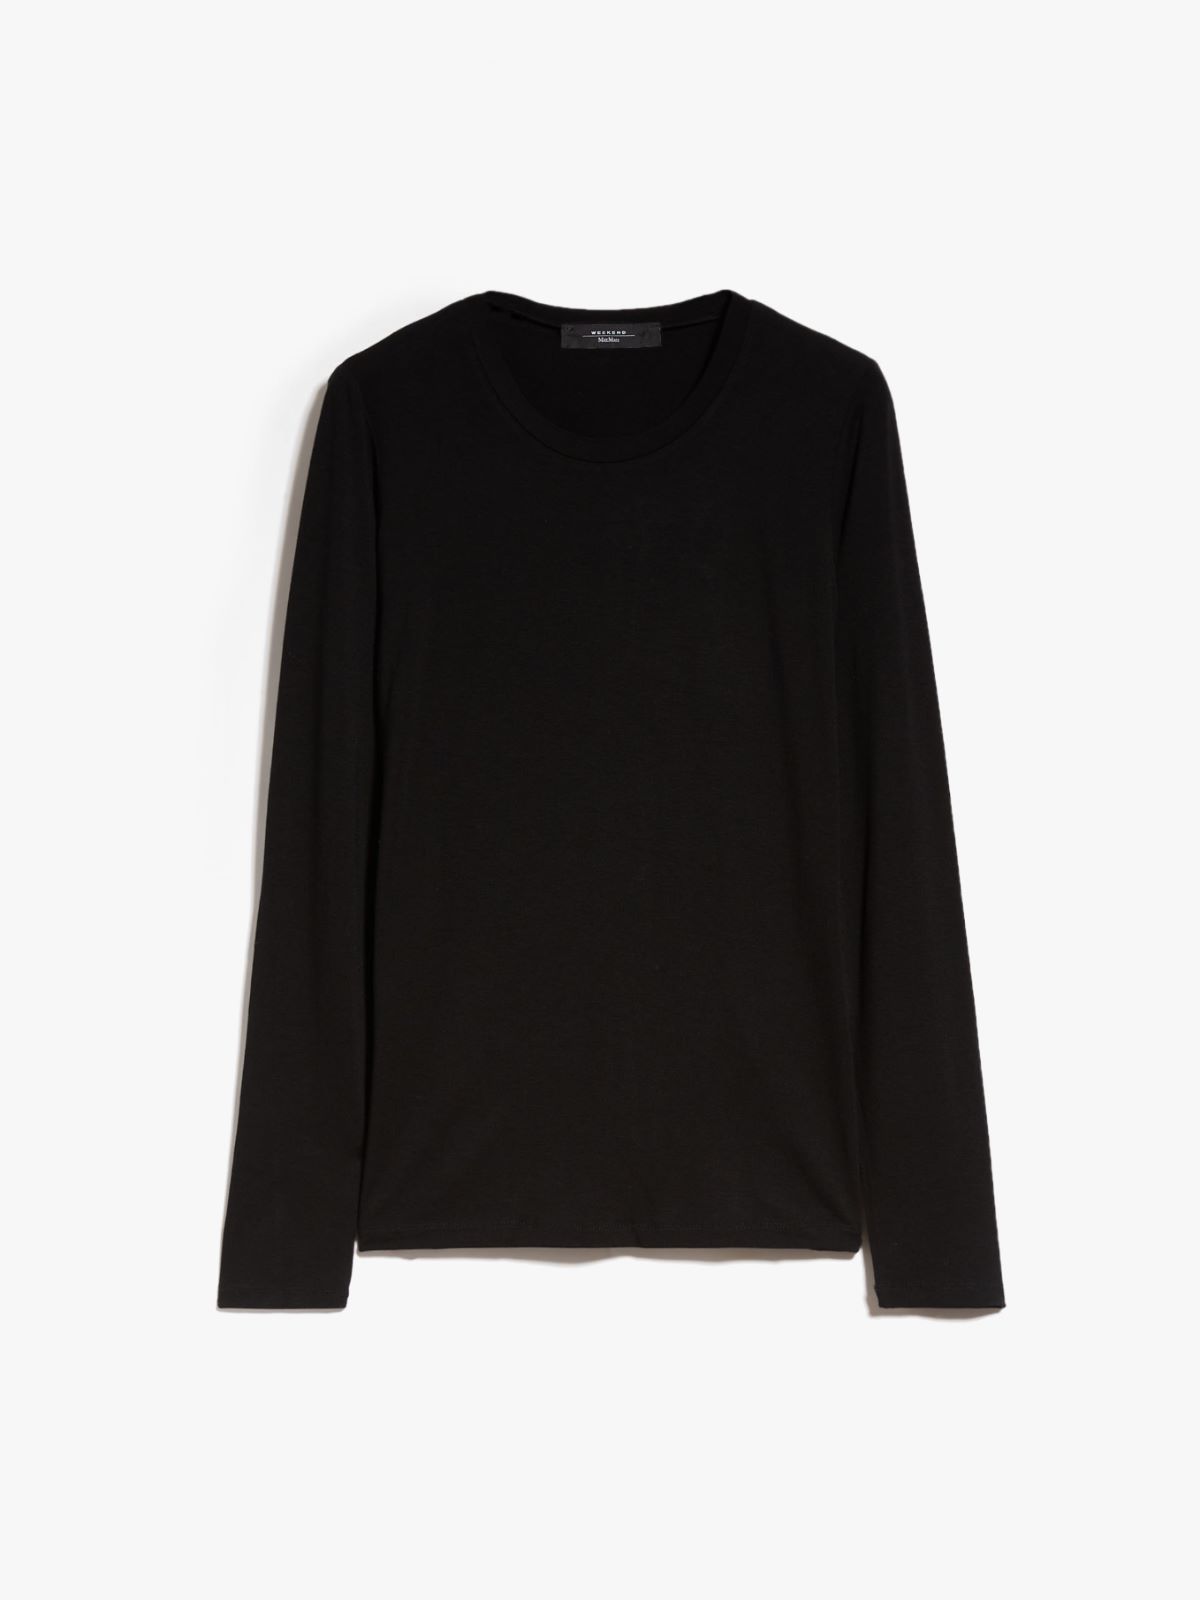 T-shirt Louis Feraud Black size 40 FR in Viscose - 34484996